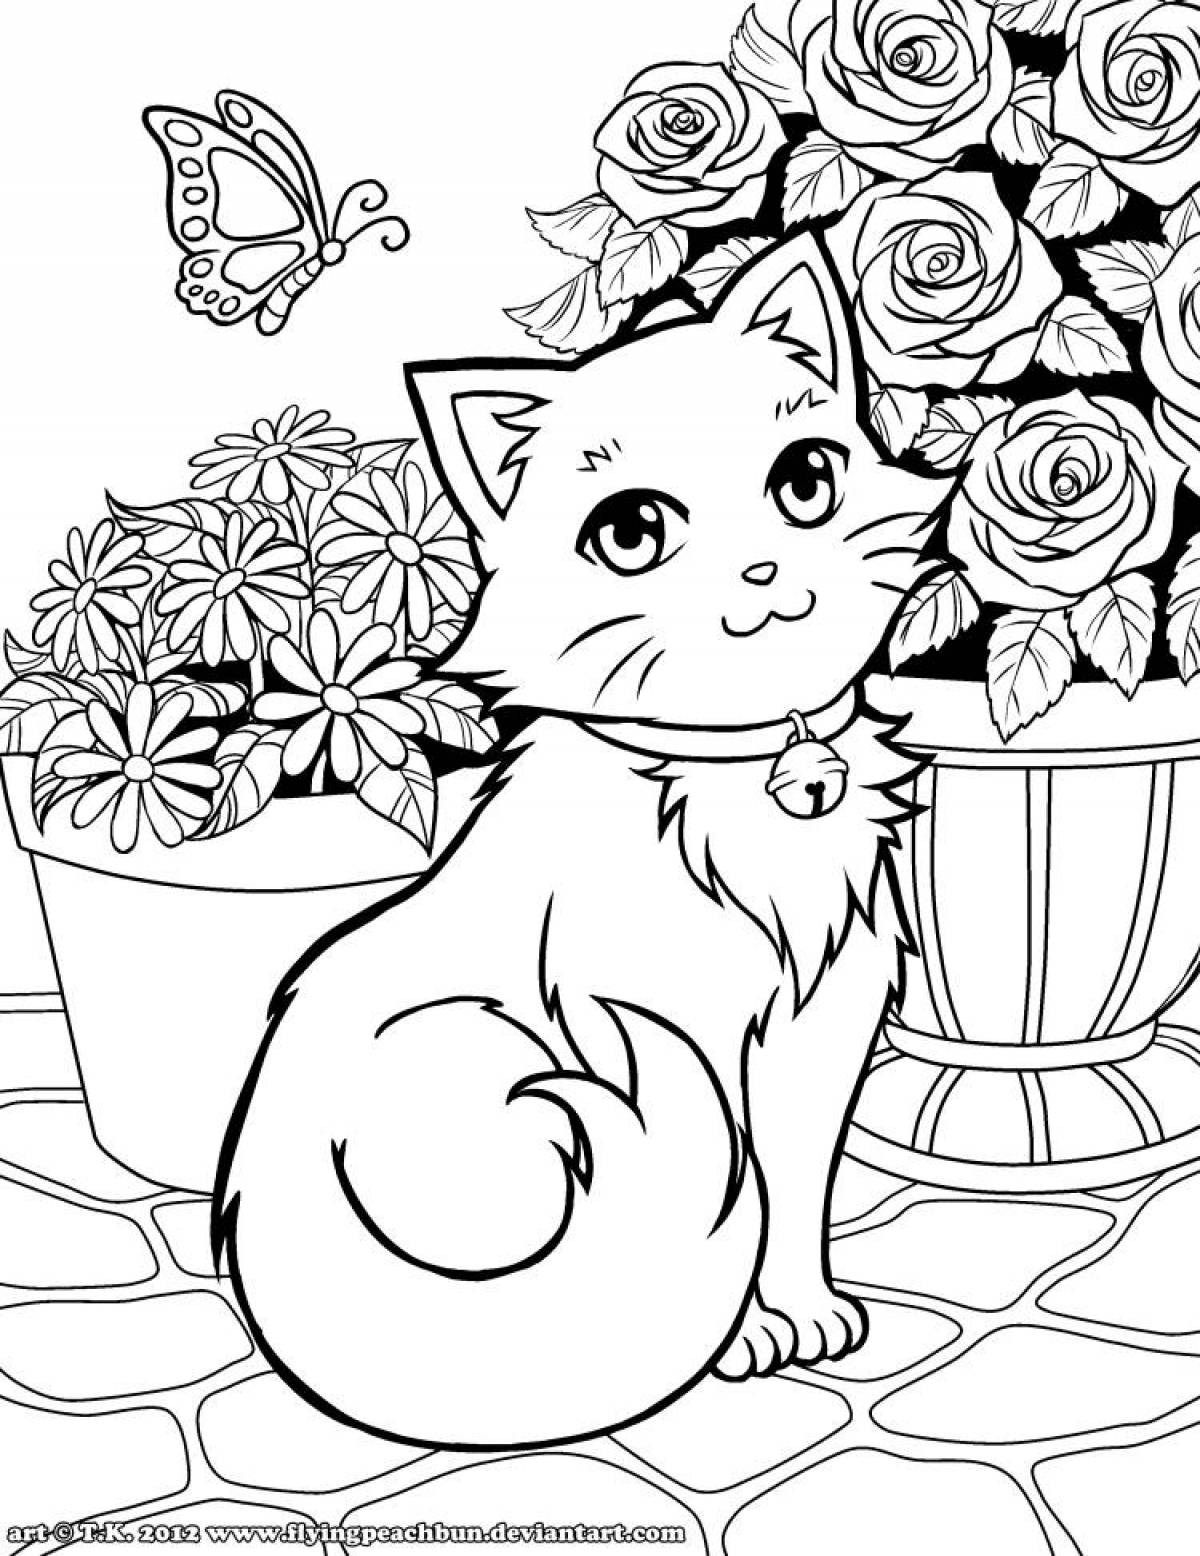 Tiny cat girl coloring book